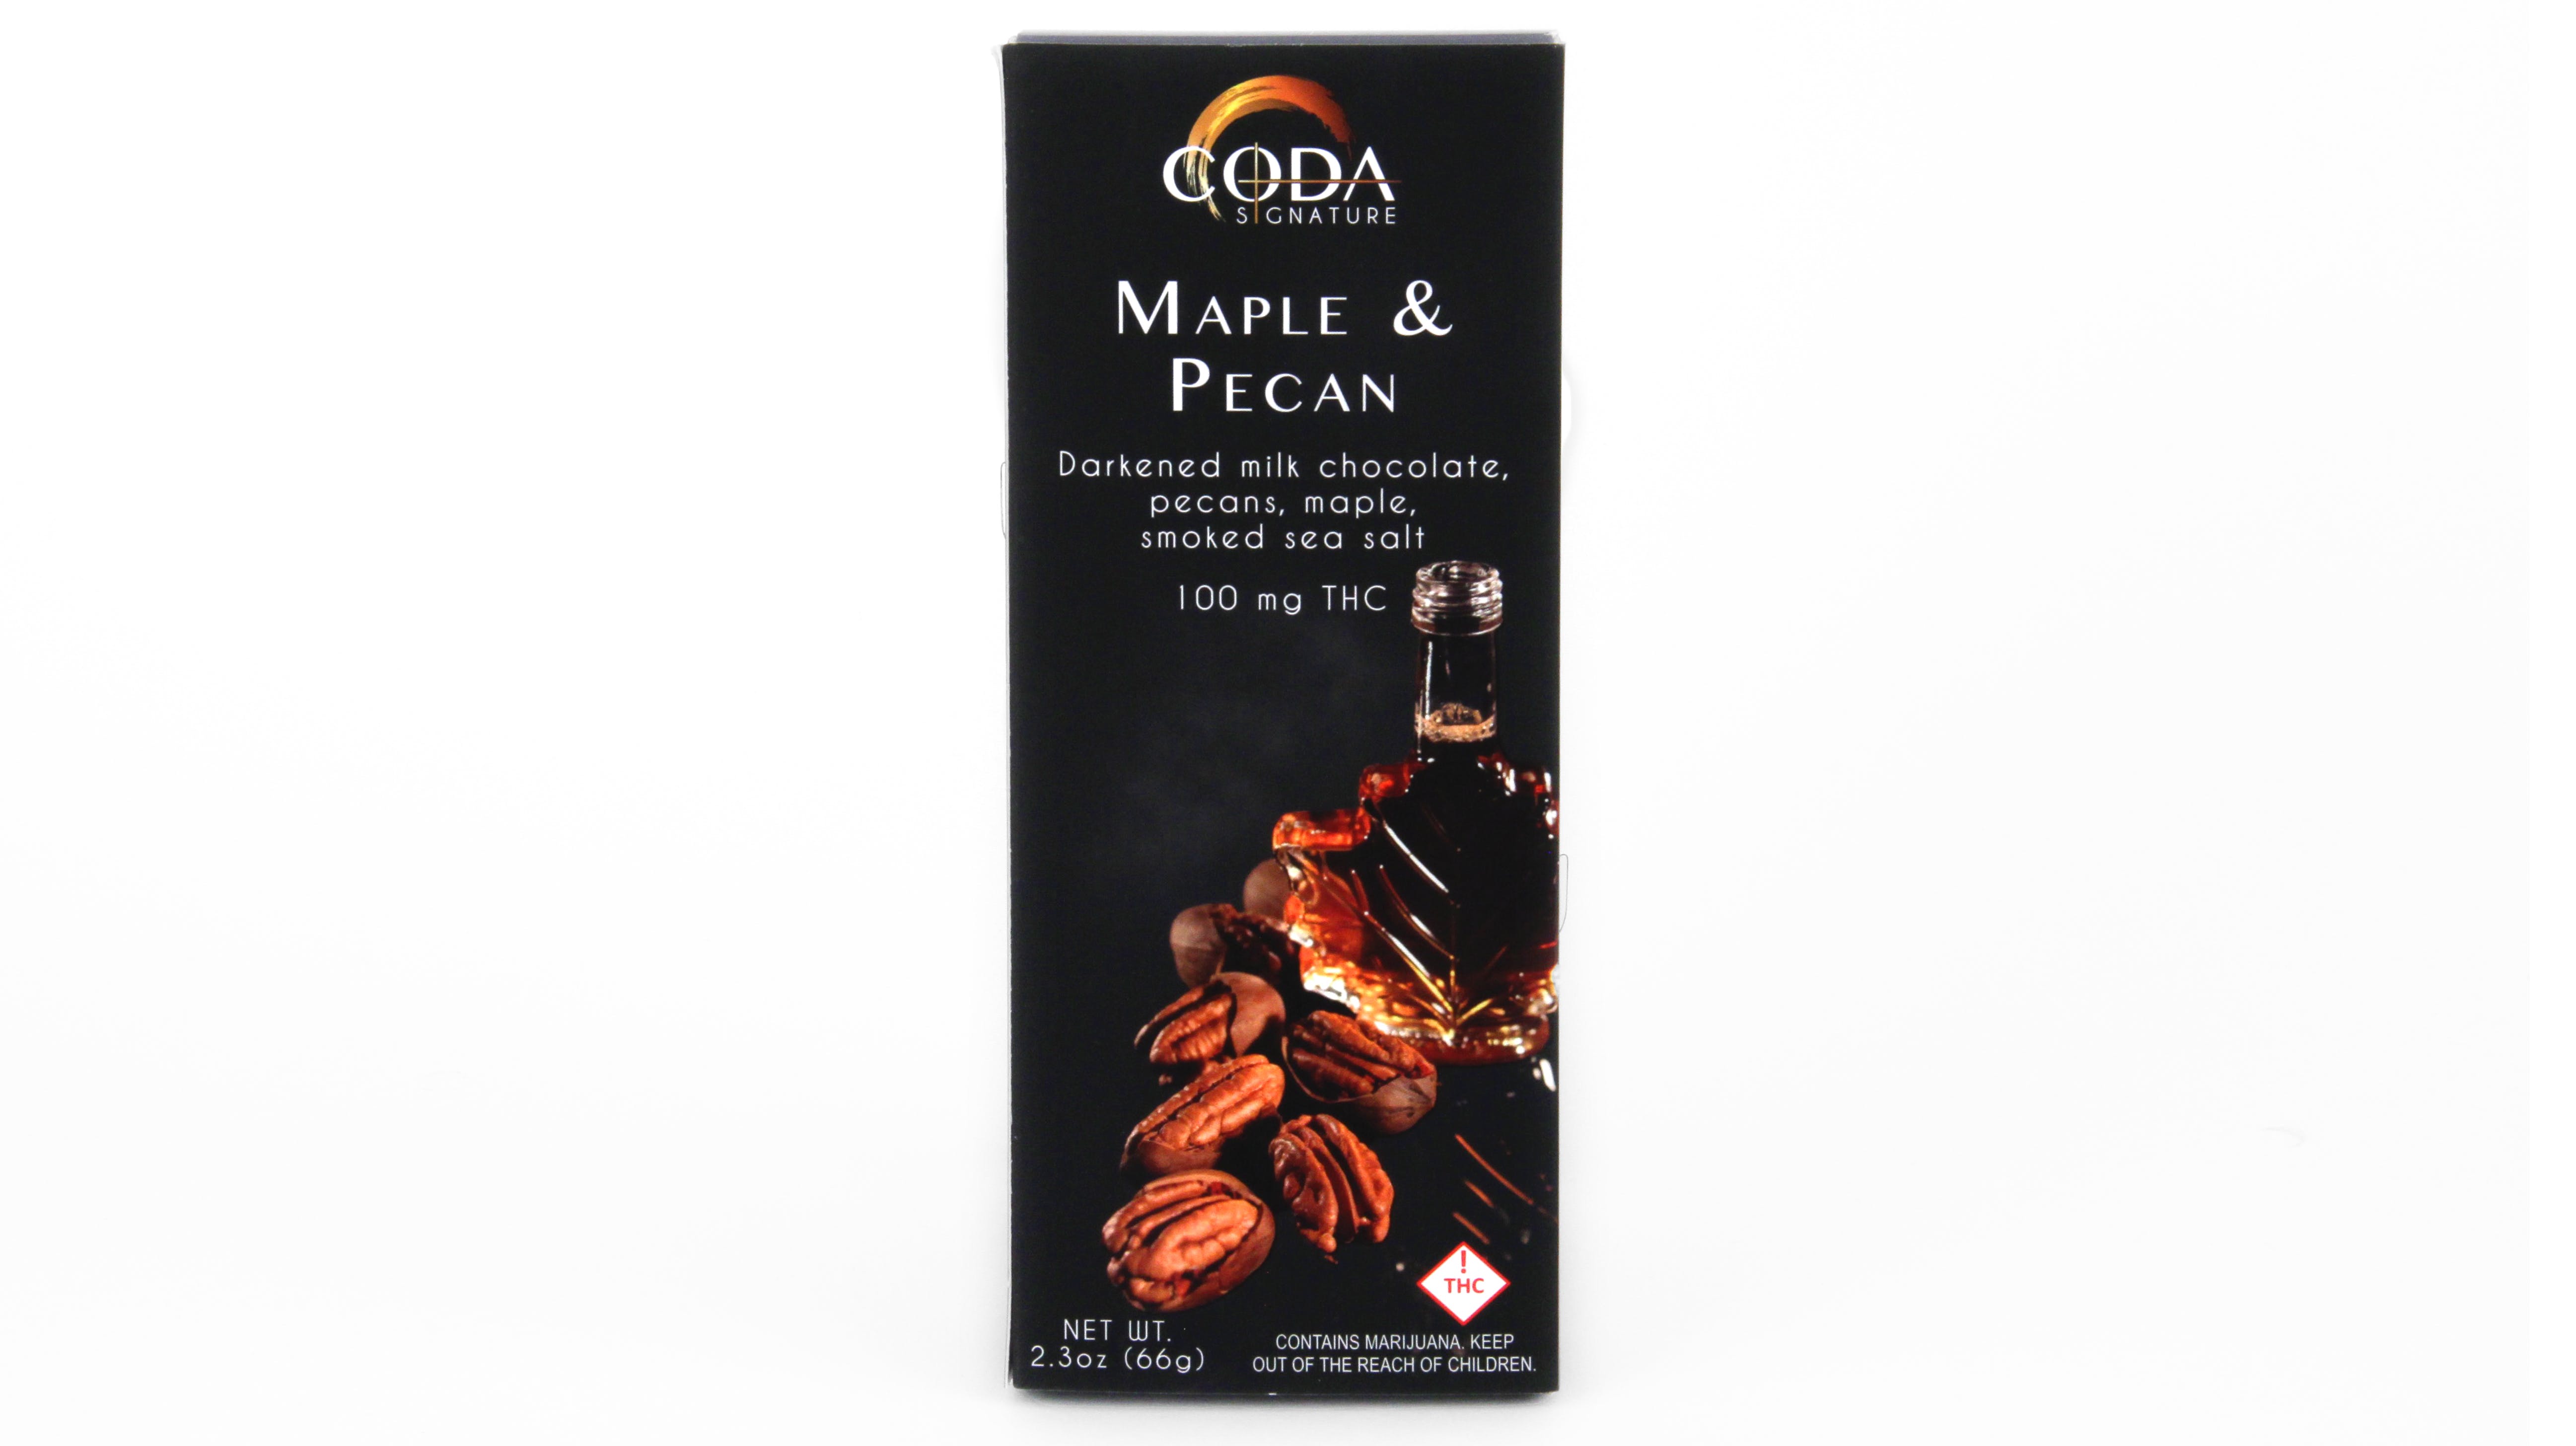 edible-coda-bar-100mg-maple-2b-pecan